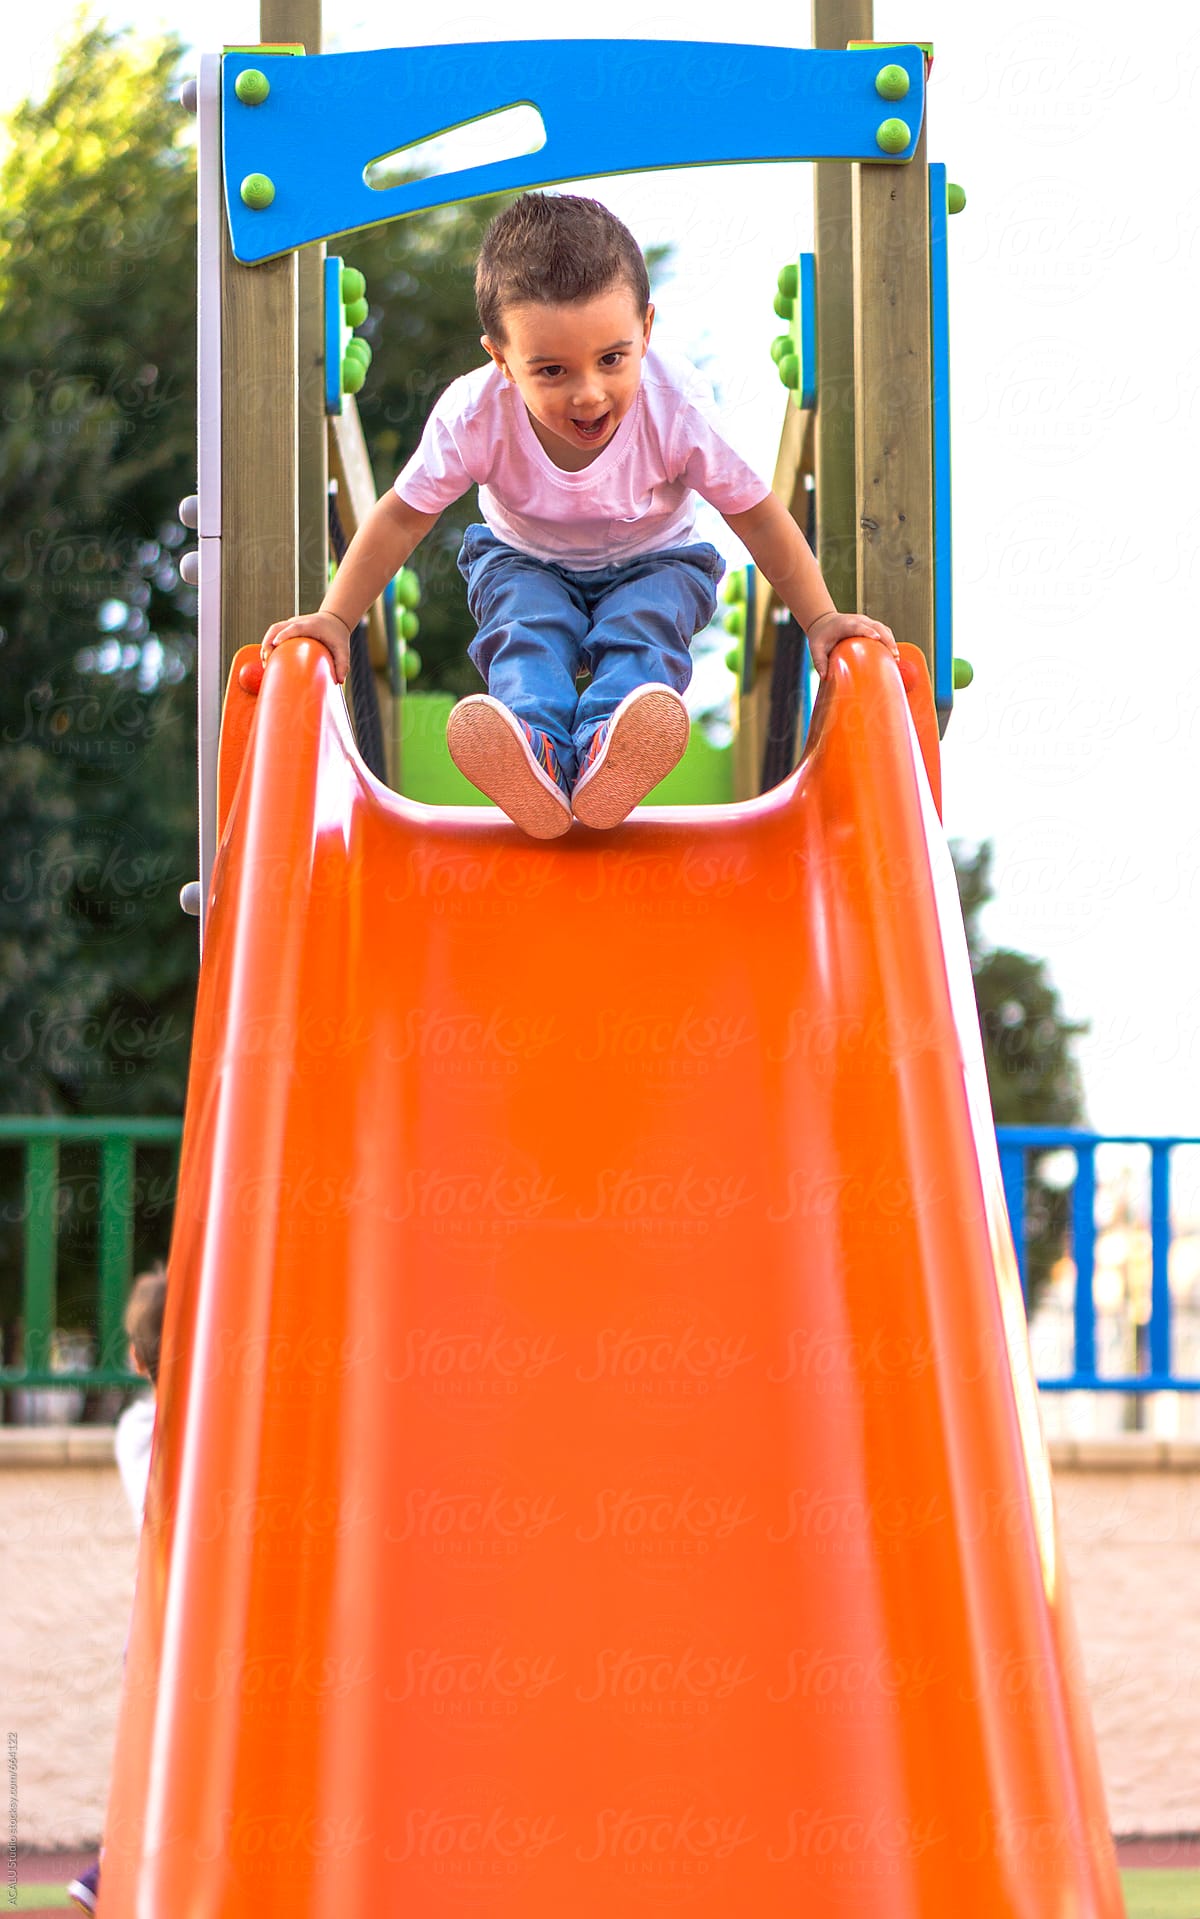 Child Sliding Down A Slide In A Playground by Stocksy Contributor ACALU  Studio - Stocksy